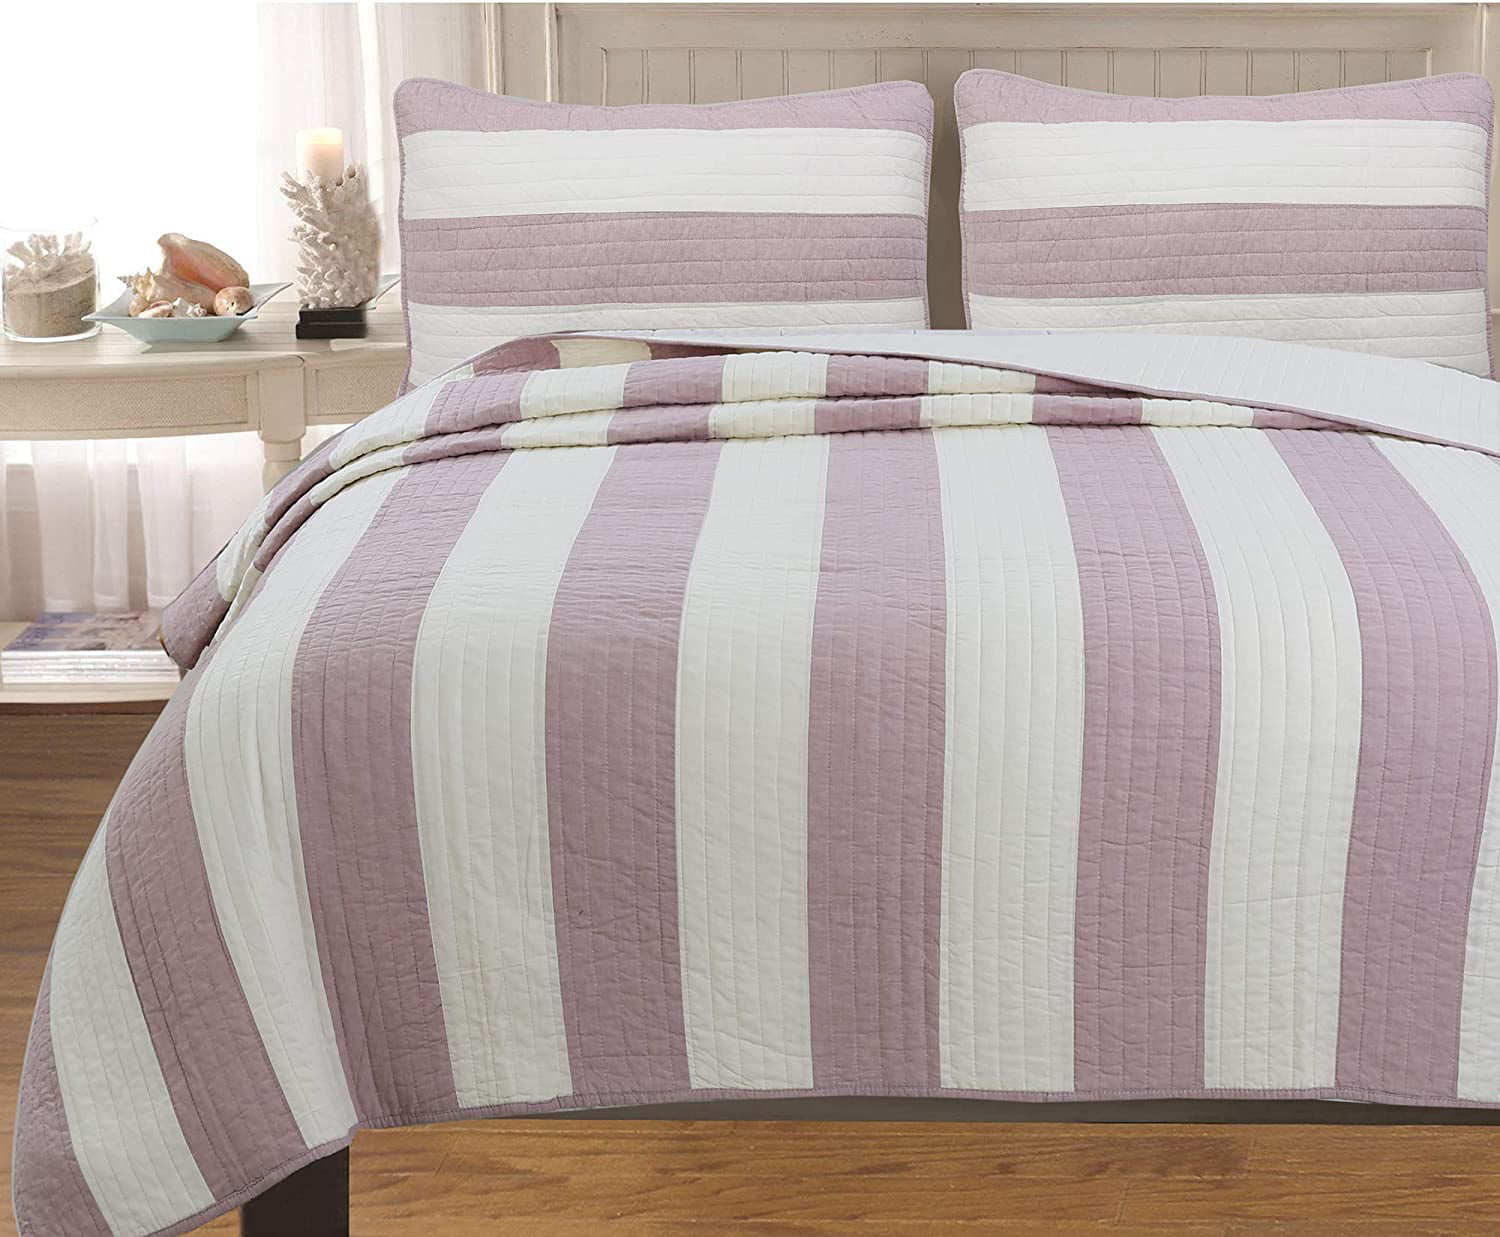 Coverlet Nesco Striped Purple Green Brown Cotton 3-Piece Quilt Set Bedspread 